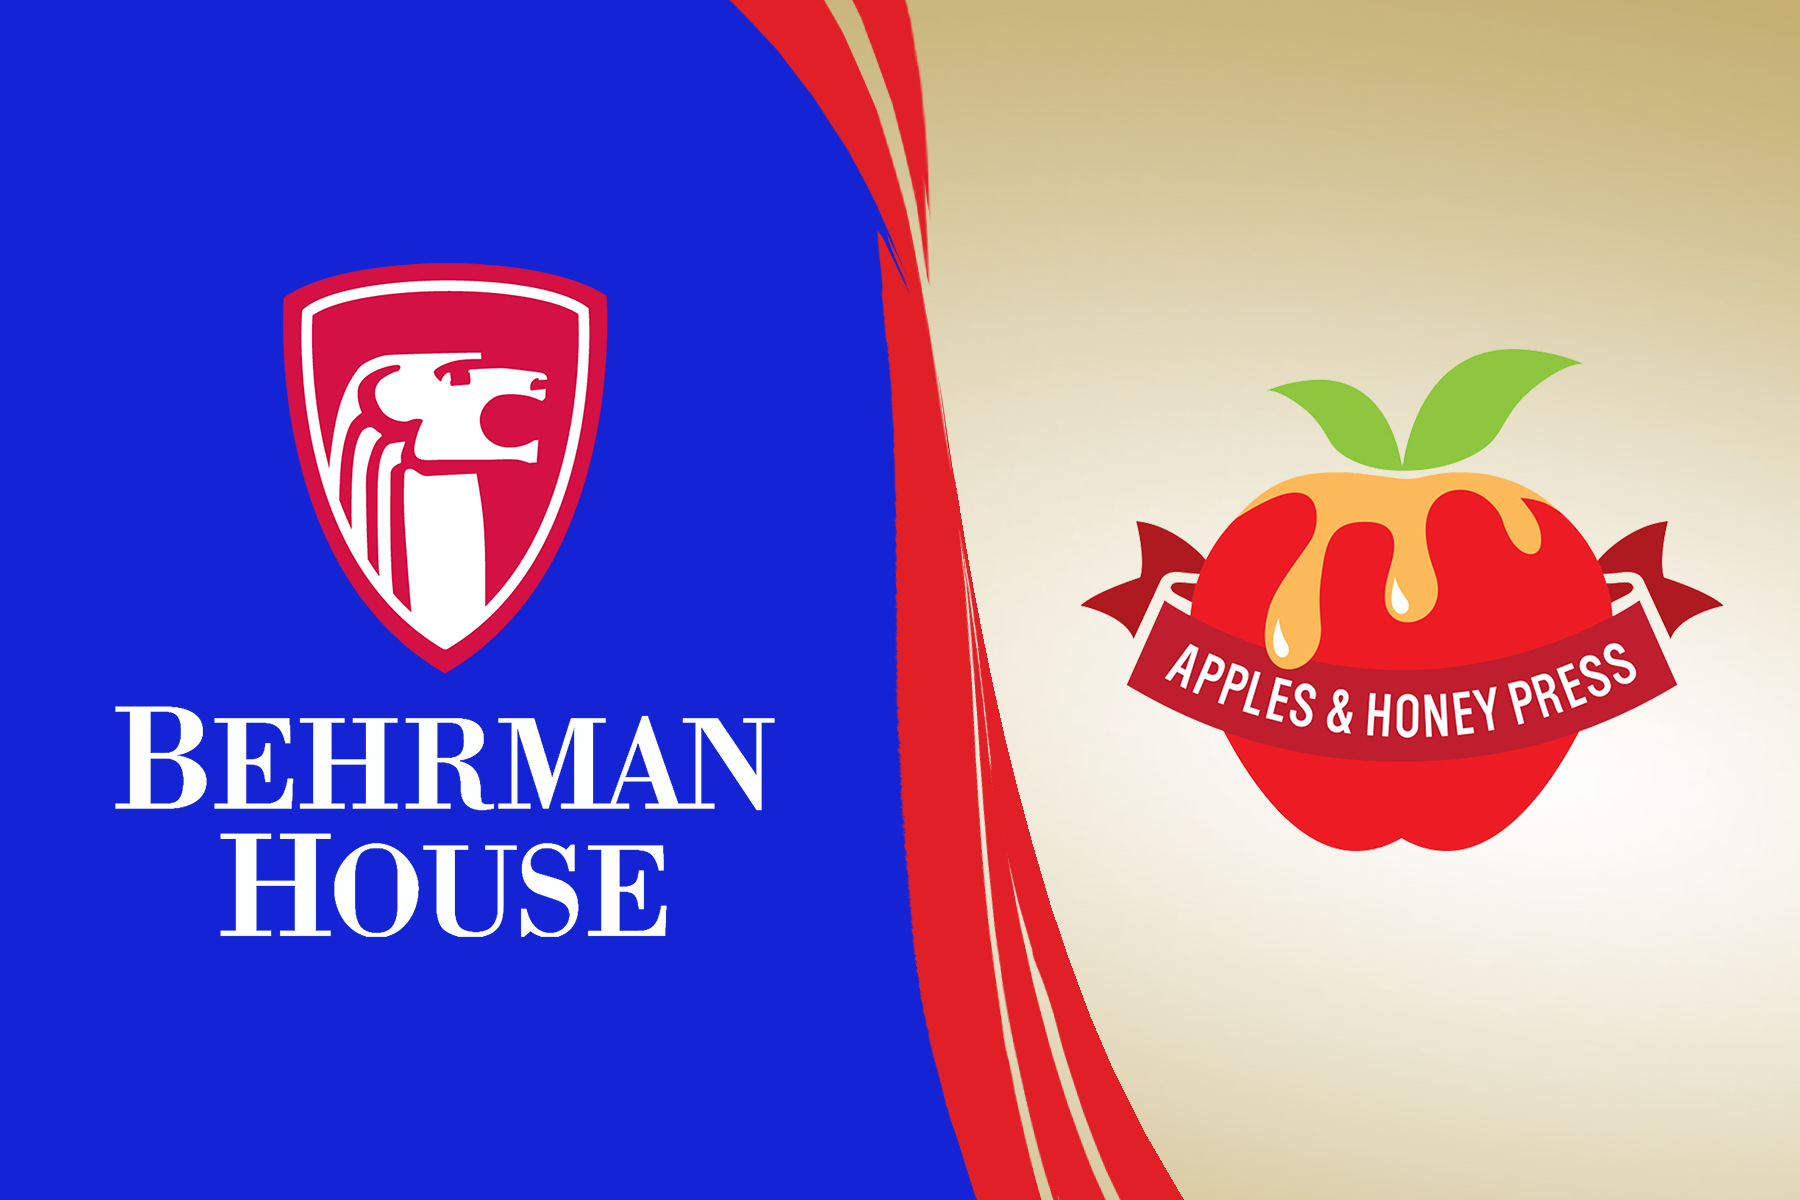 Sales and Marketing at Behrman House, Apples & Honey Press